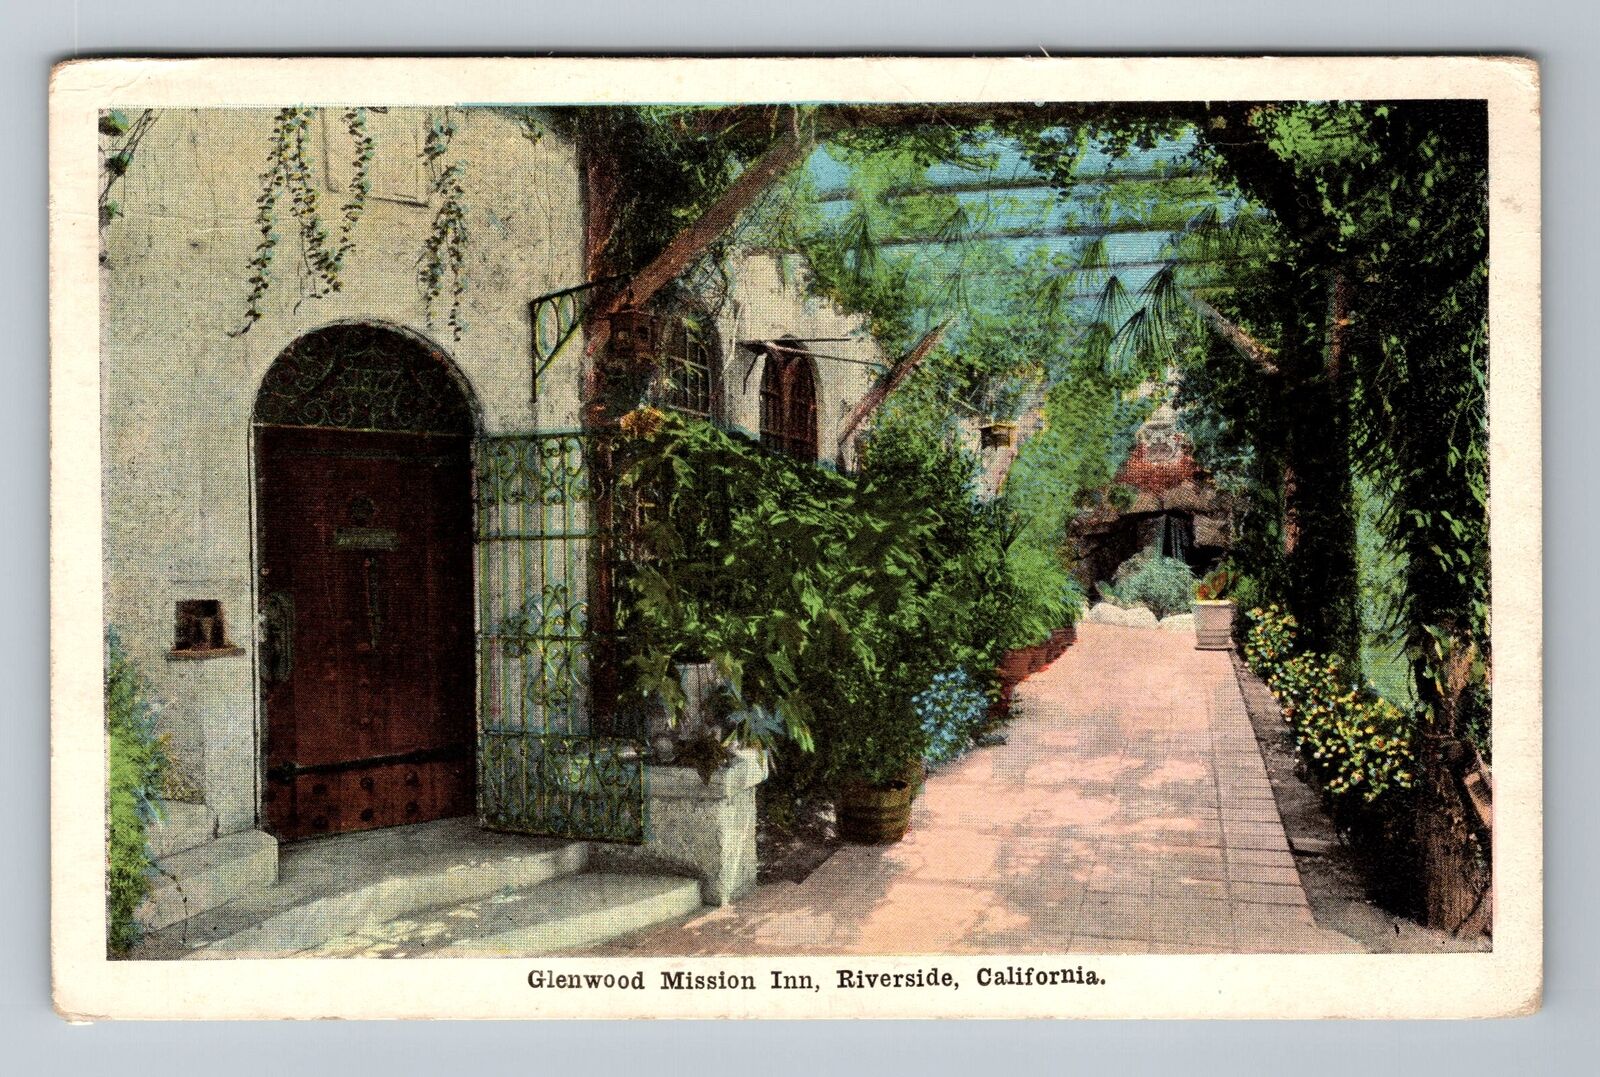 Riverside CA-California, Glenwood Mission Inn, c1941, Vintage Postcard